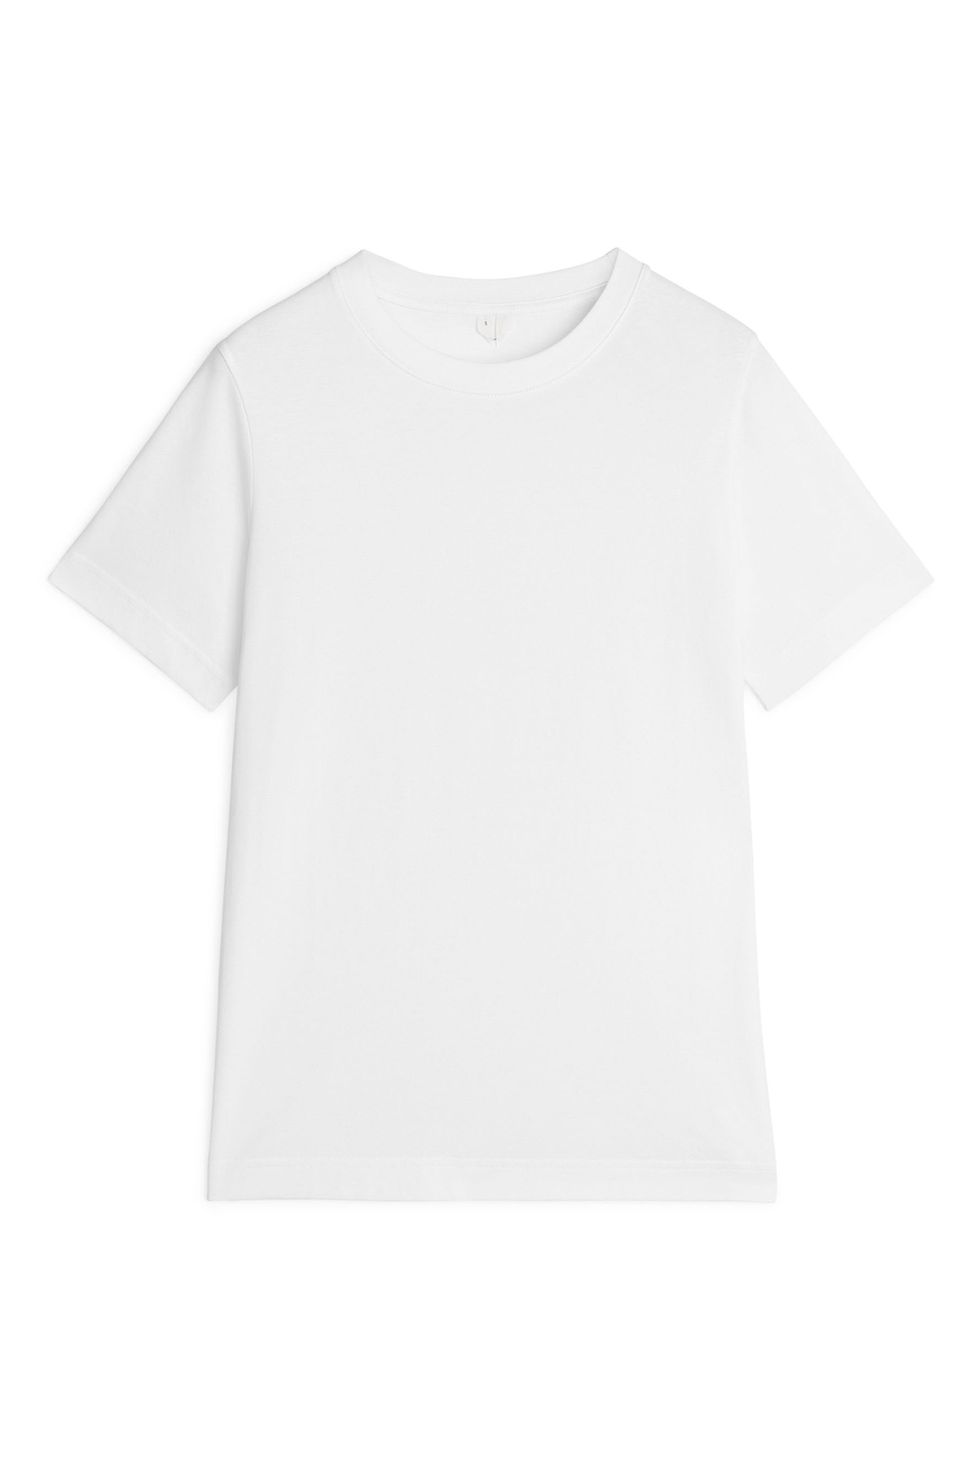 Arket white T shirt